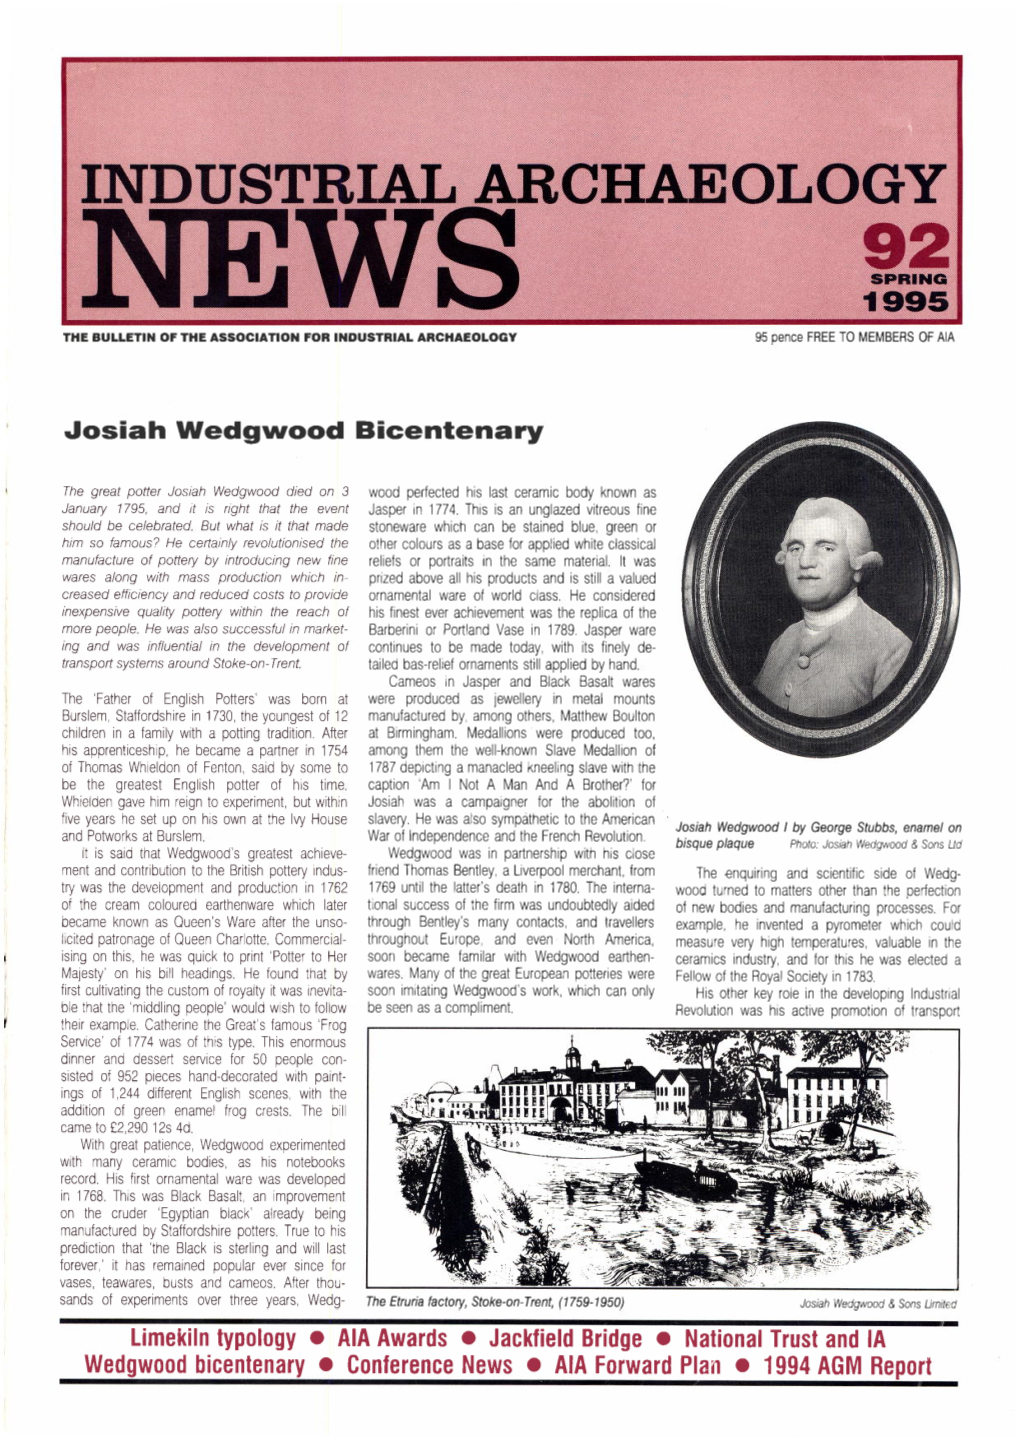 Josiah Wedgwood Bicentenary